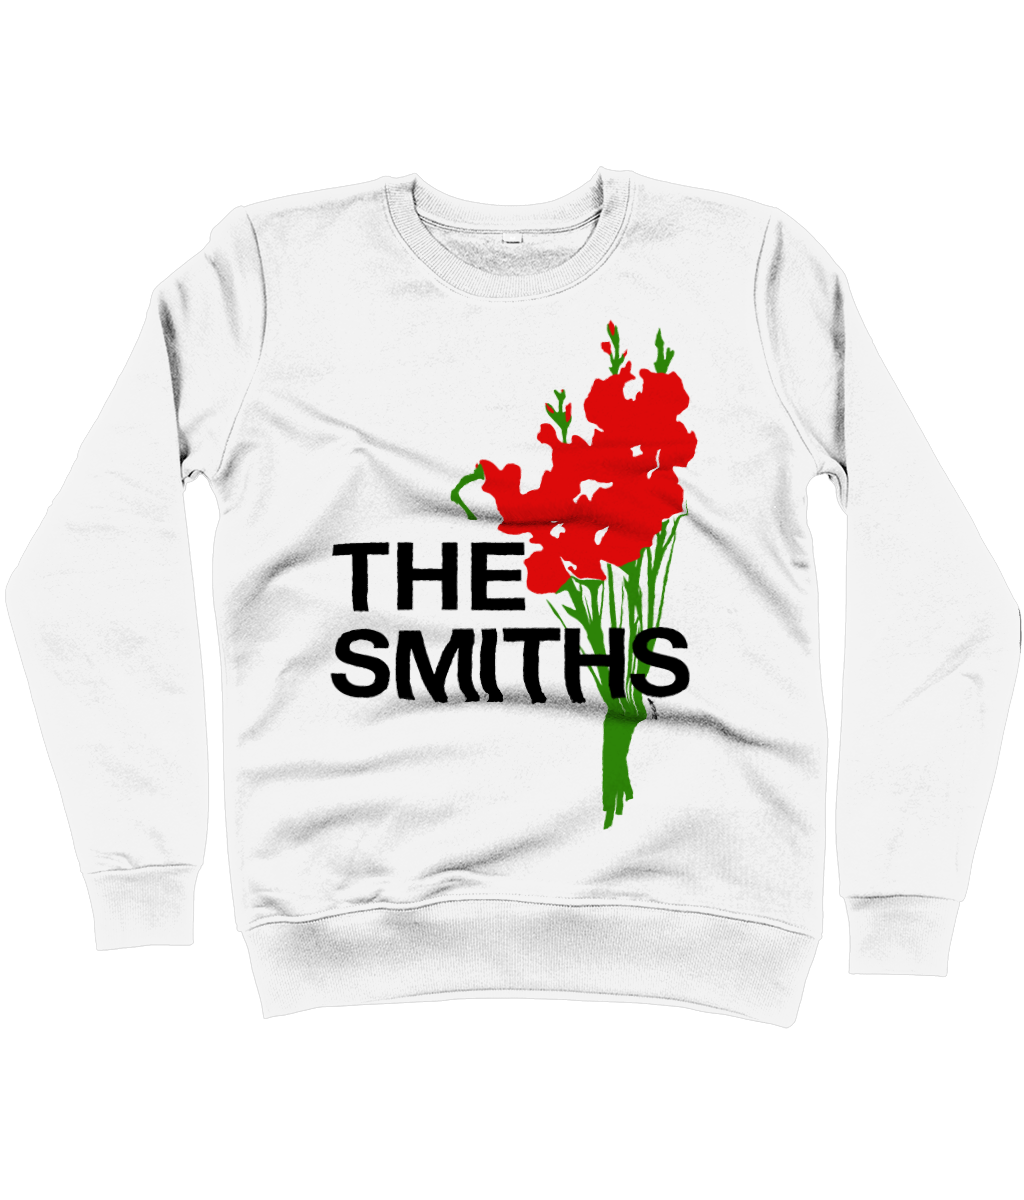 THE SMITHS - UK Tour 1984 - Sweatshirt